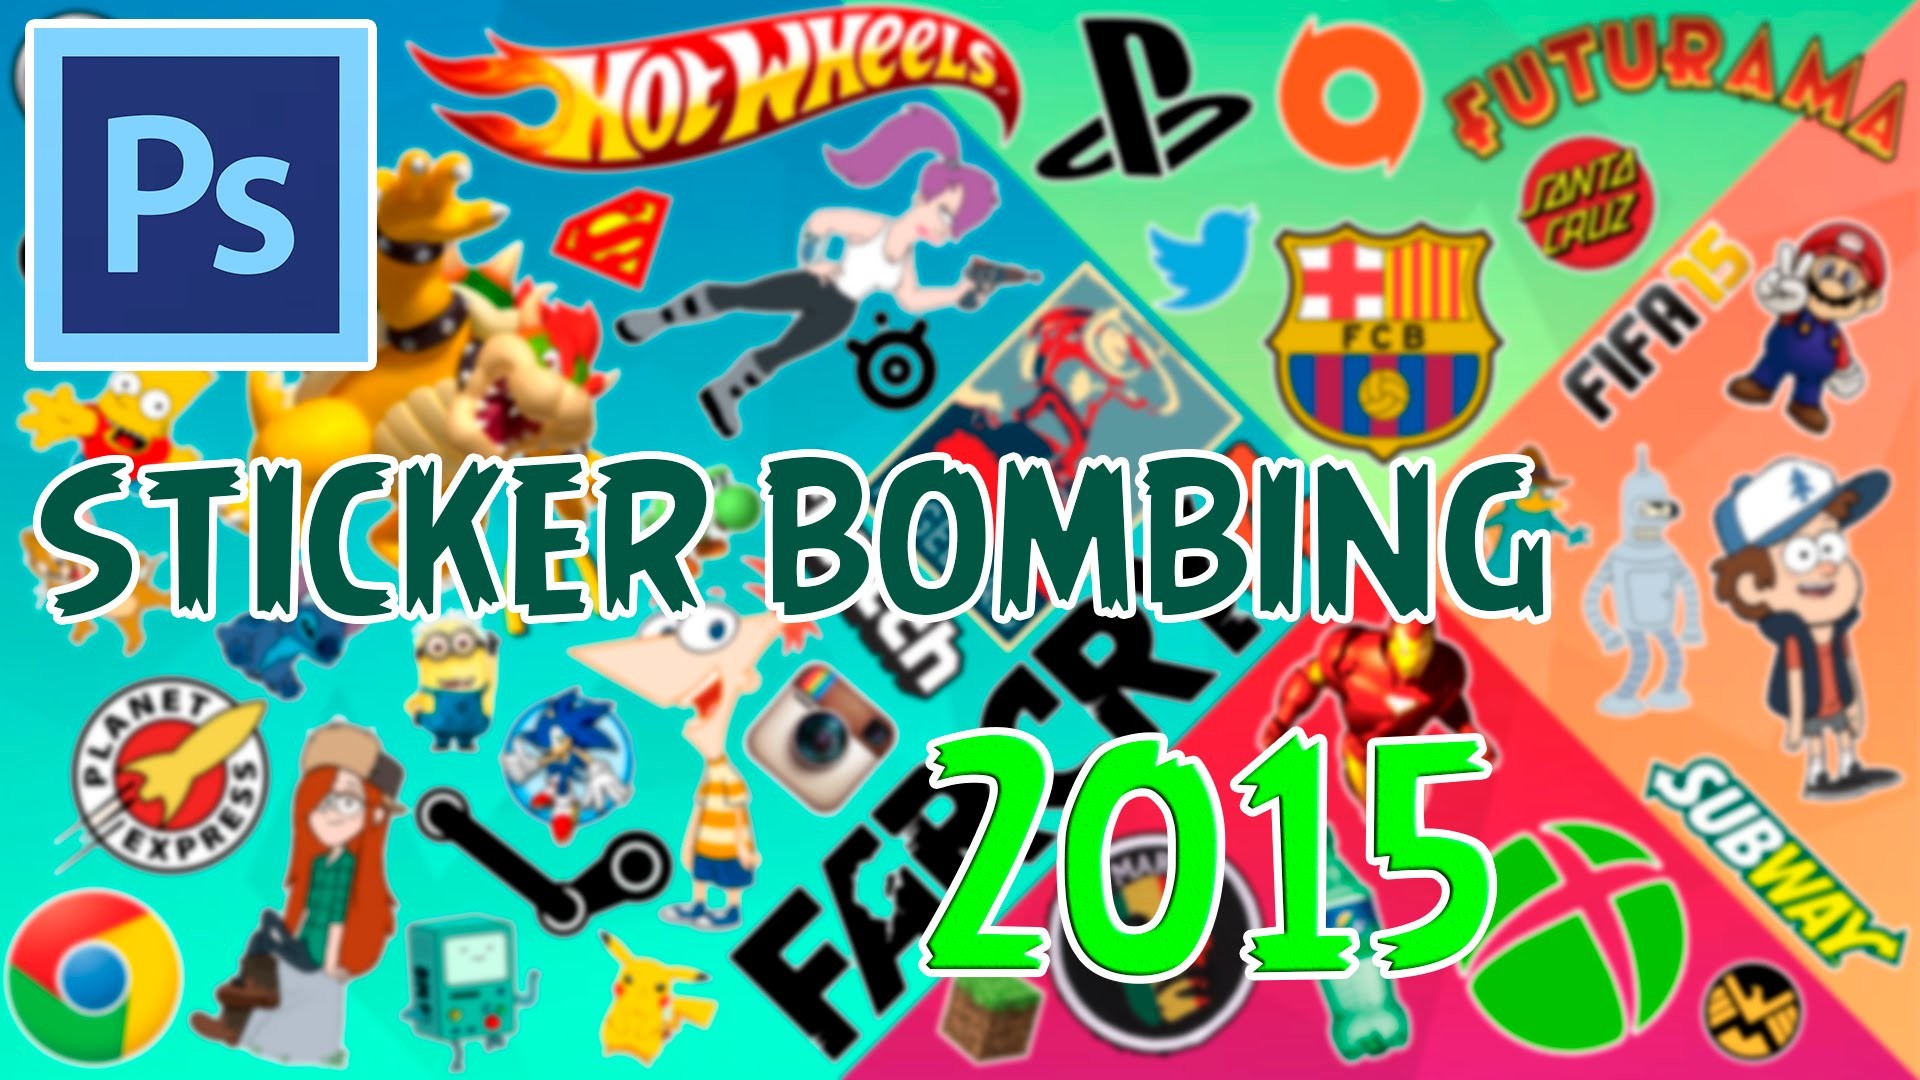 Adobe Photoshop CS6 [Sticker Bombing] – 2015â¢